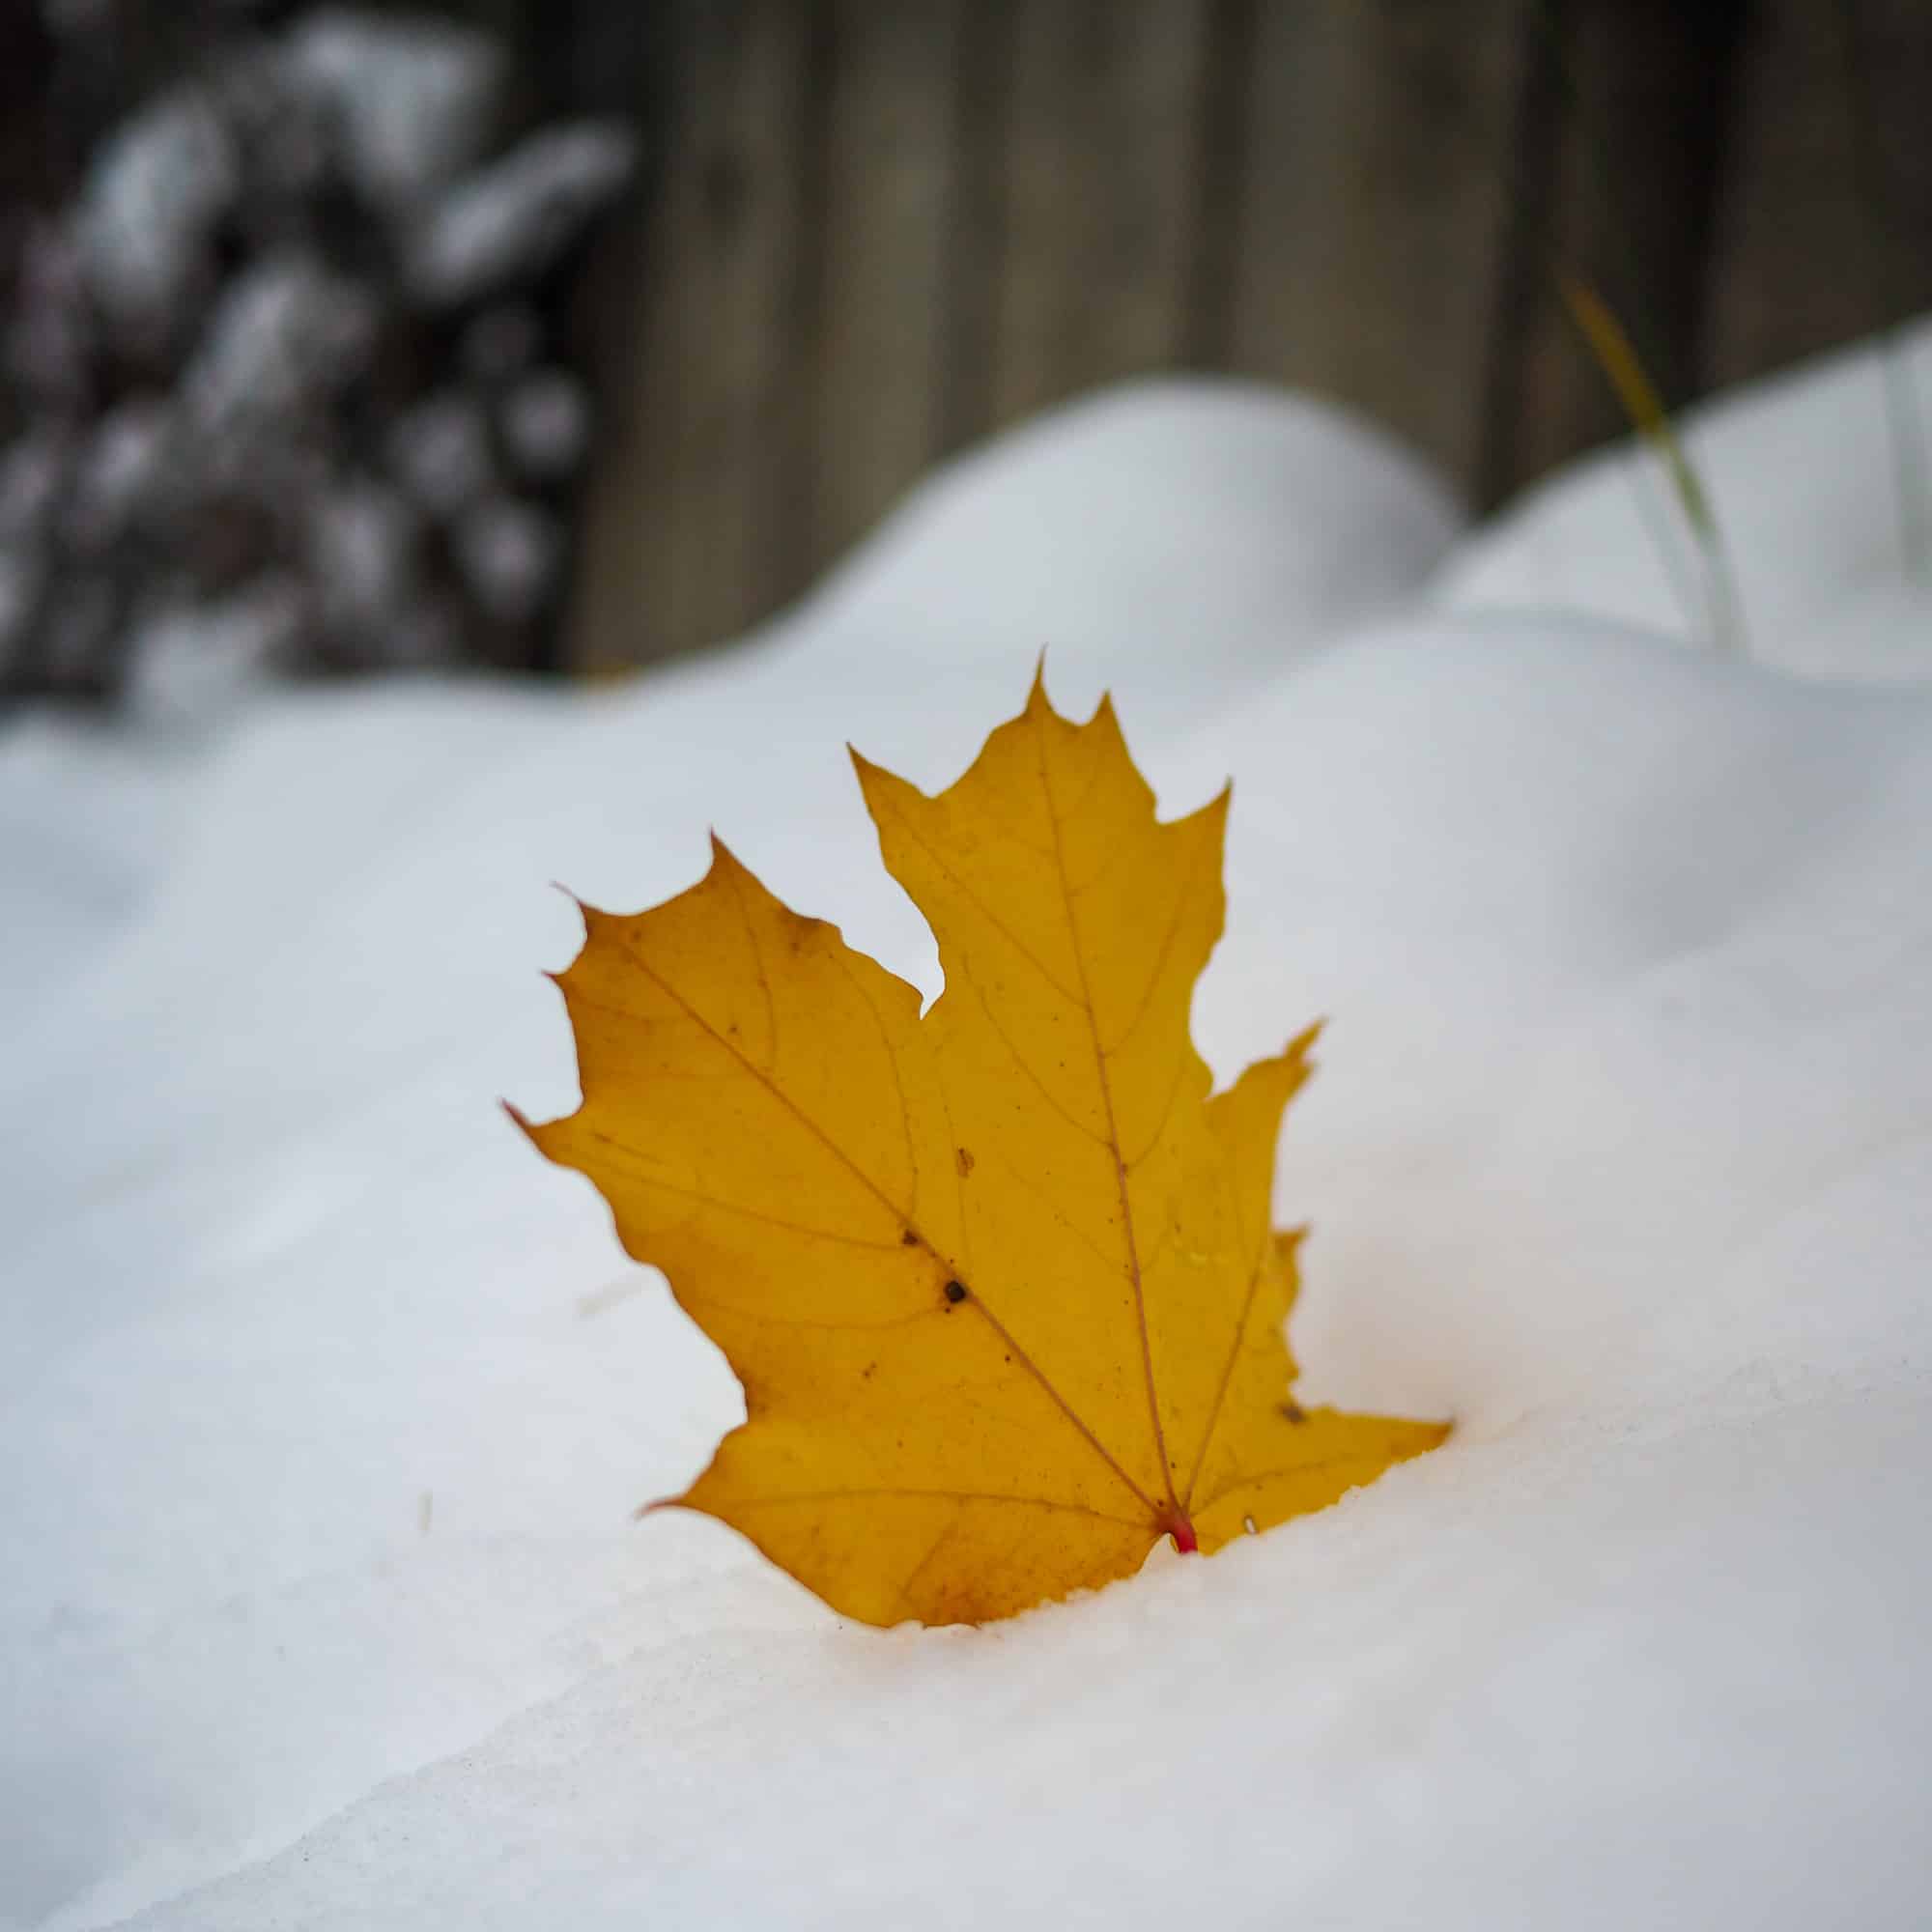 Bortblåst blad i snø på Helsfyr